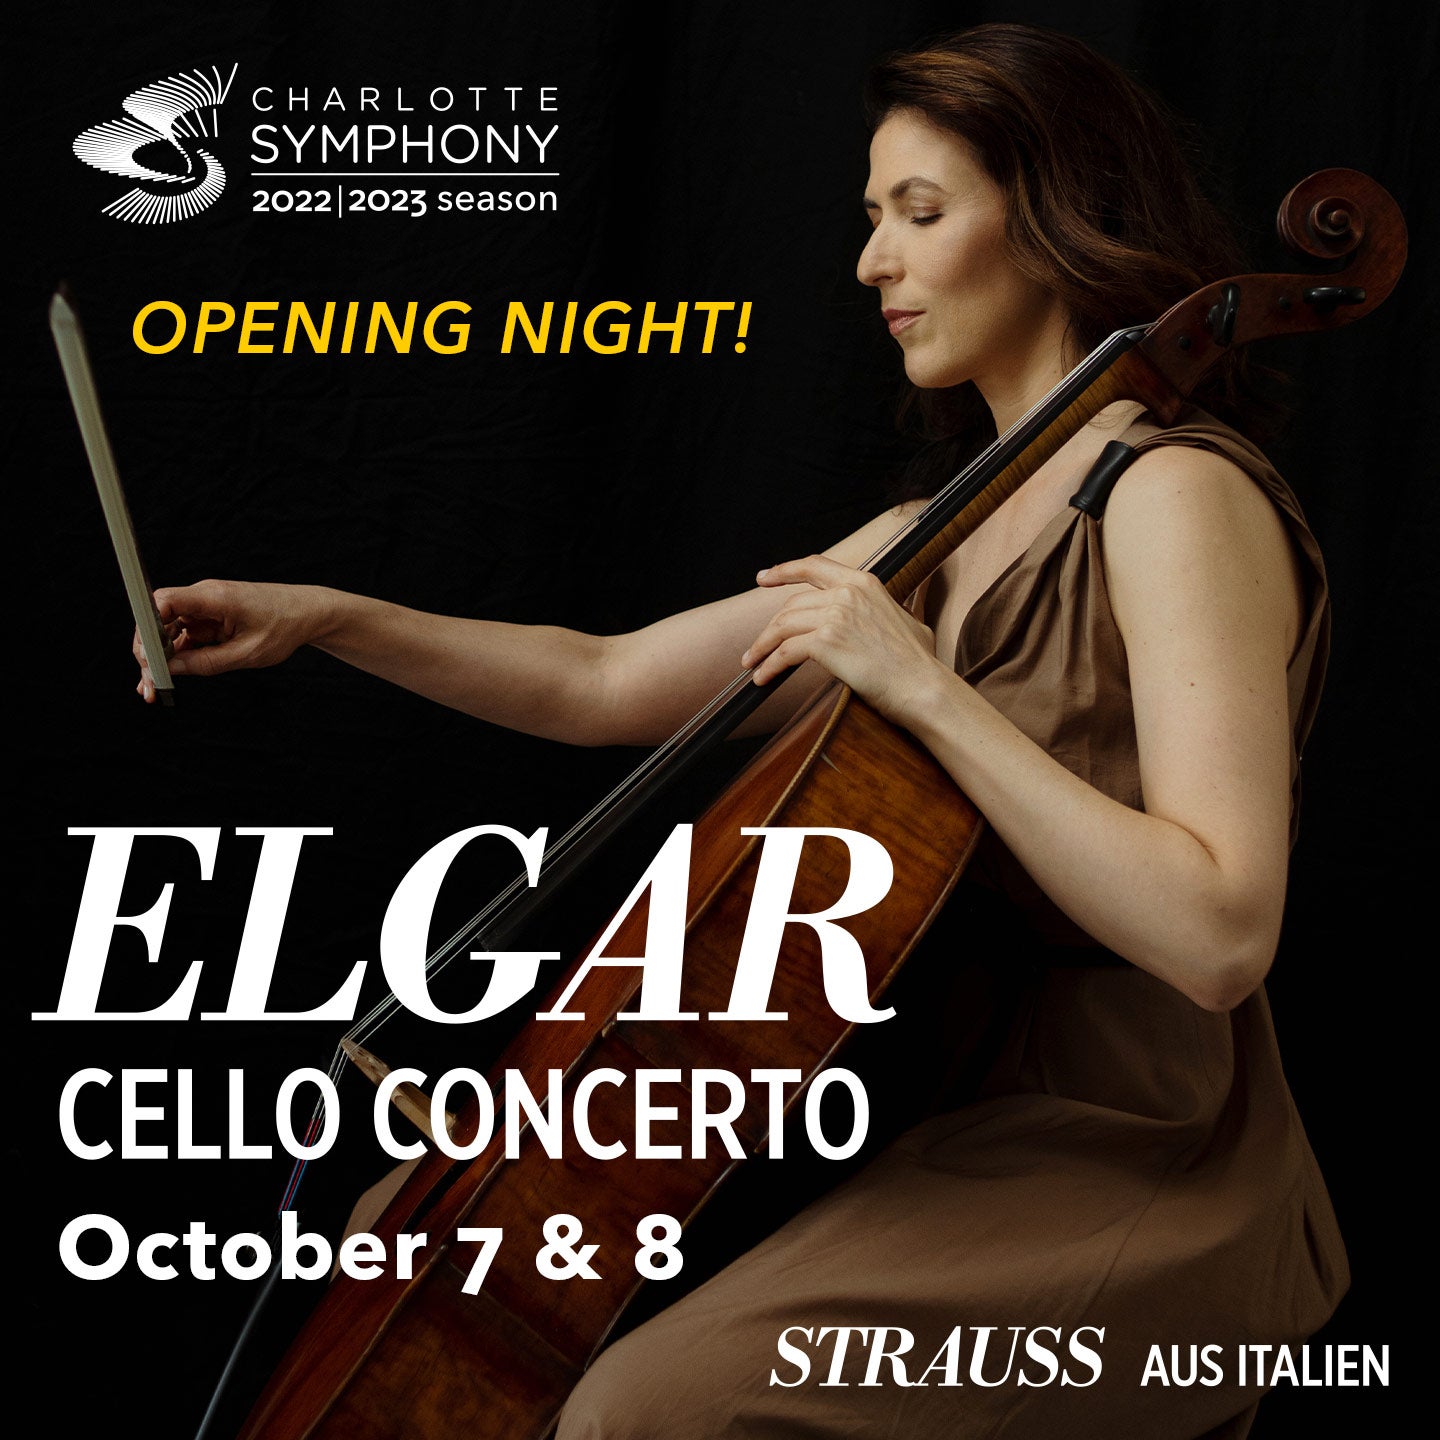 Charlotte Symphony: Elgar Cello Concerto